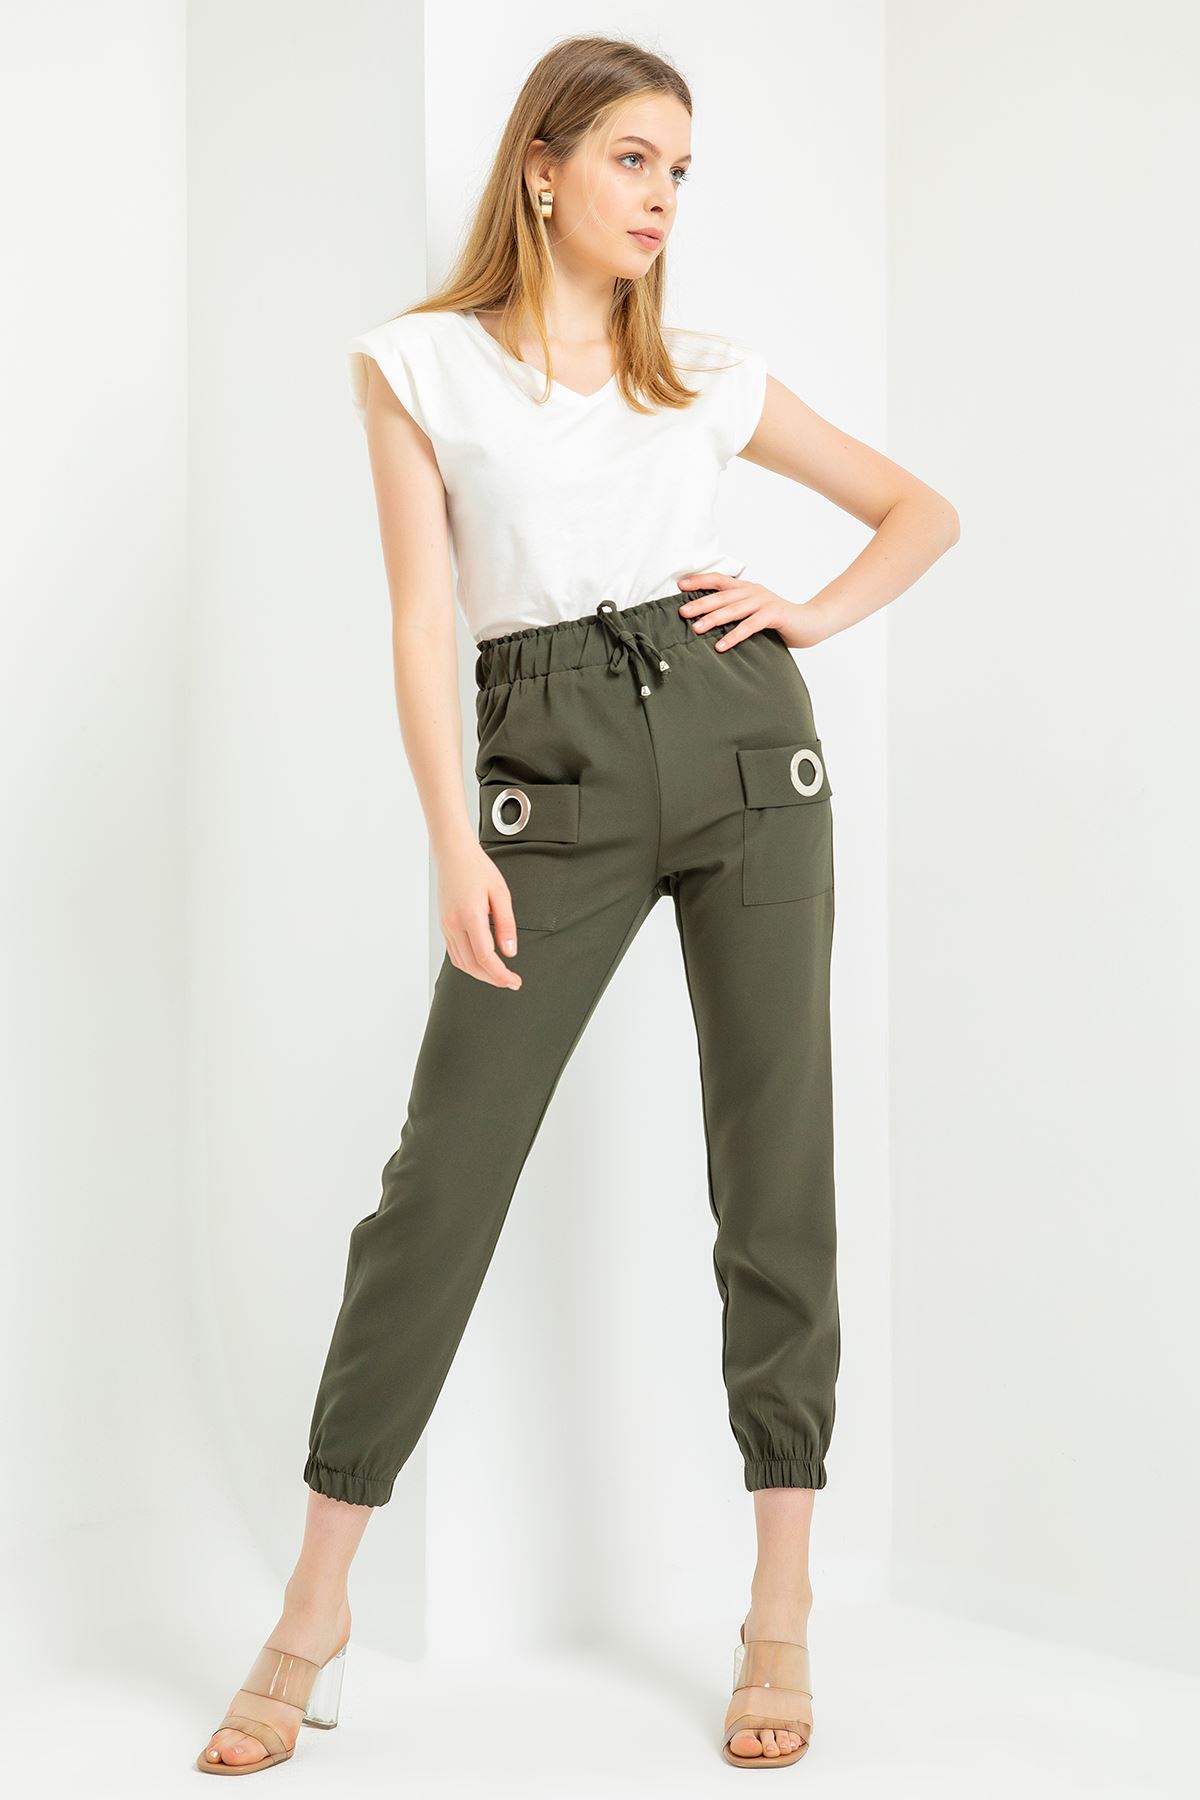 Licra Fabric Ankle Length Elastic Waist Jogger Women'S Trouser - Khaki 